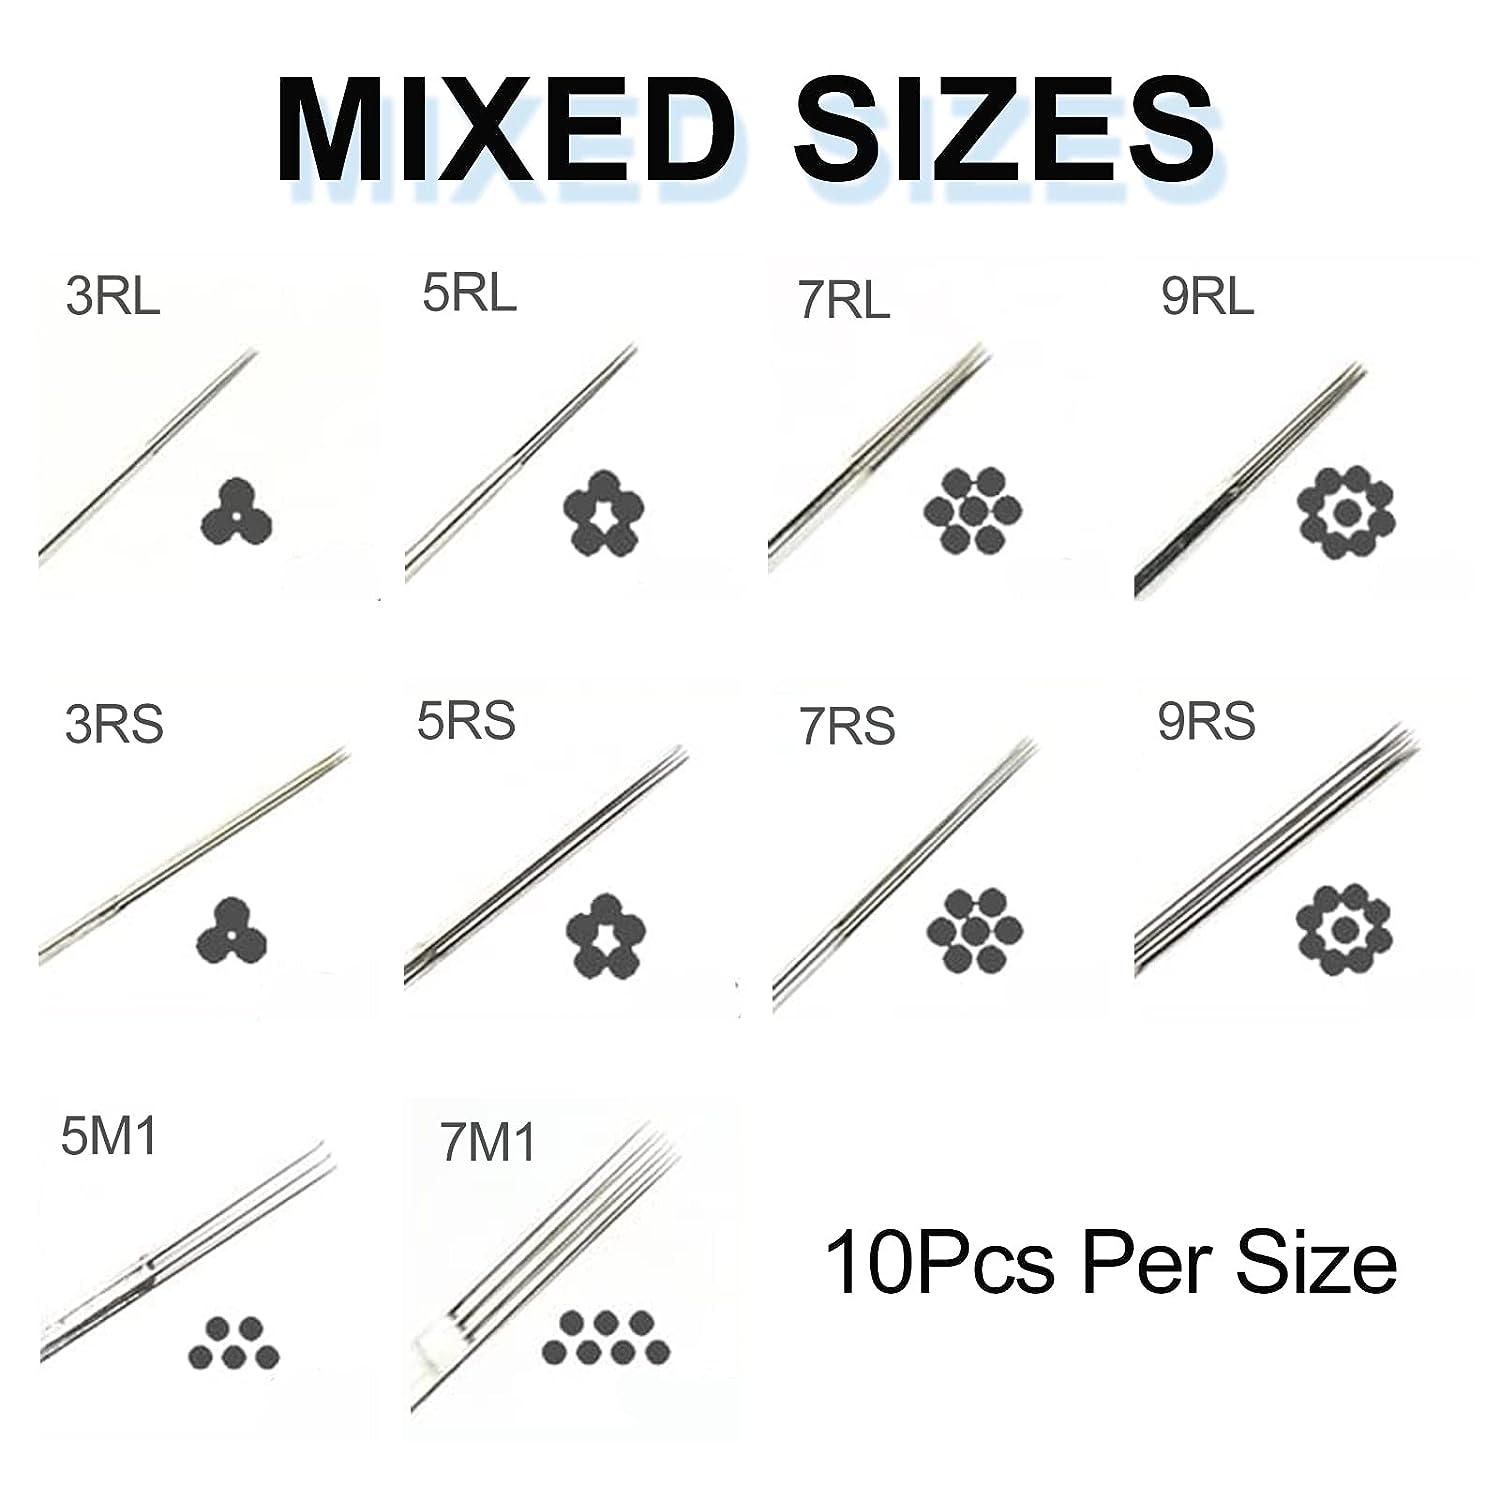 Usiriy 50pcs Mixed Size Needles Stick and Poke Needles Long Bar 3RL 5RL 7RL  9RL 3RS 5RS 7RS 9RS 5M1 7M1